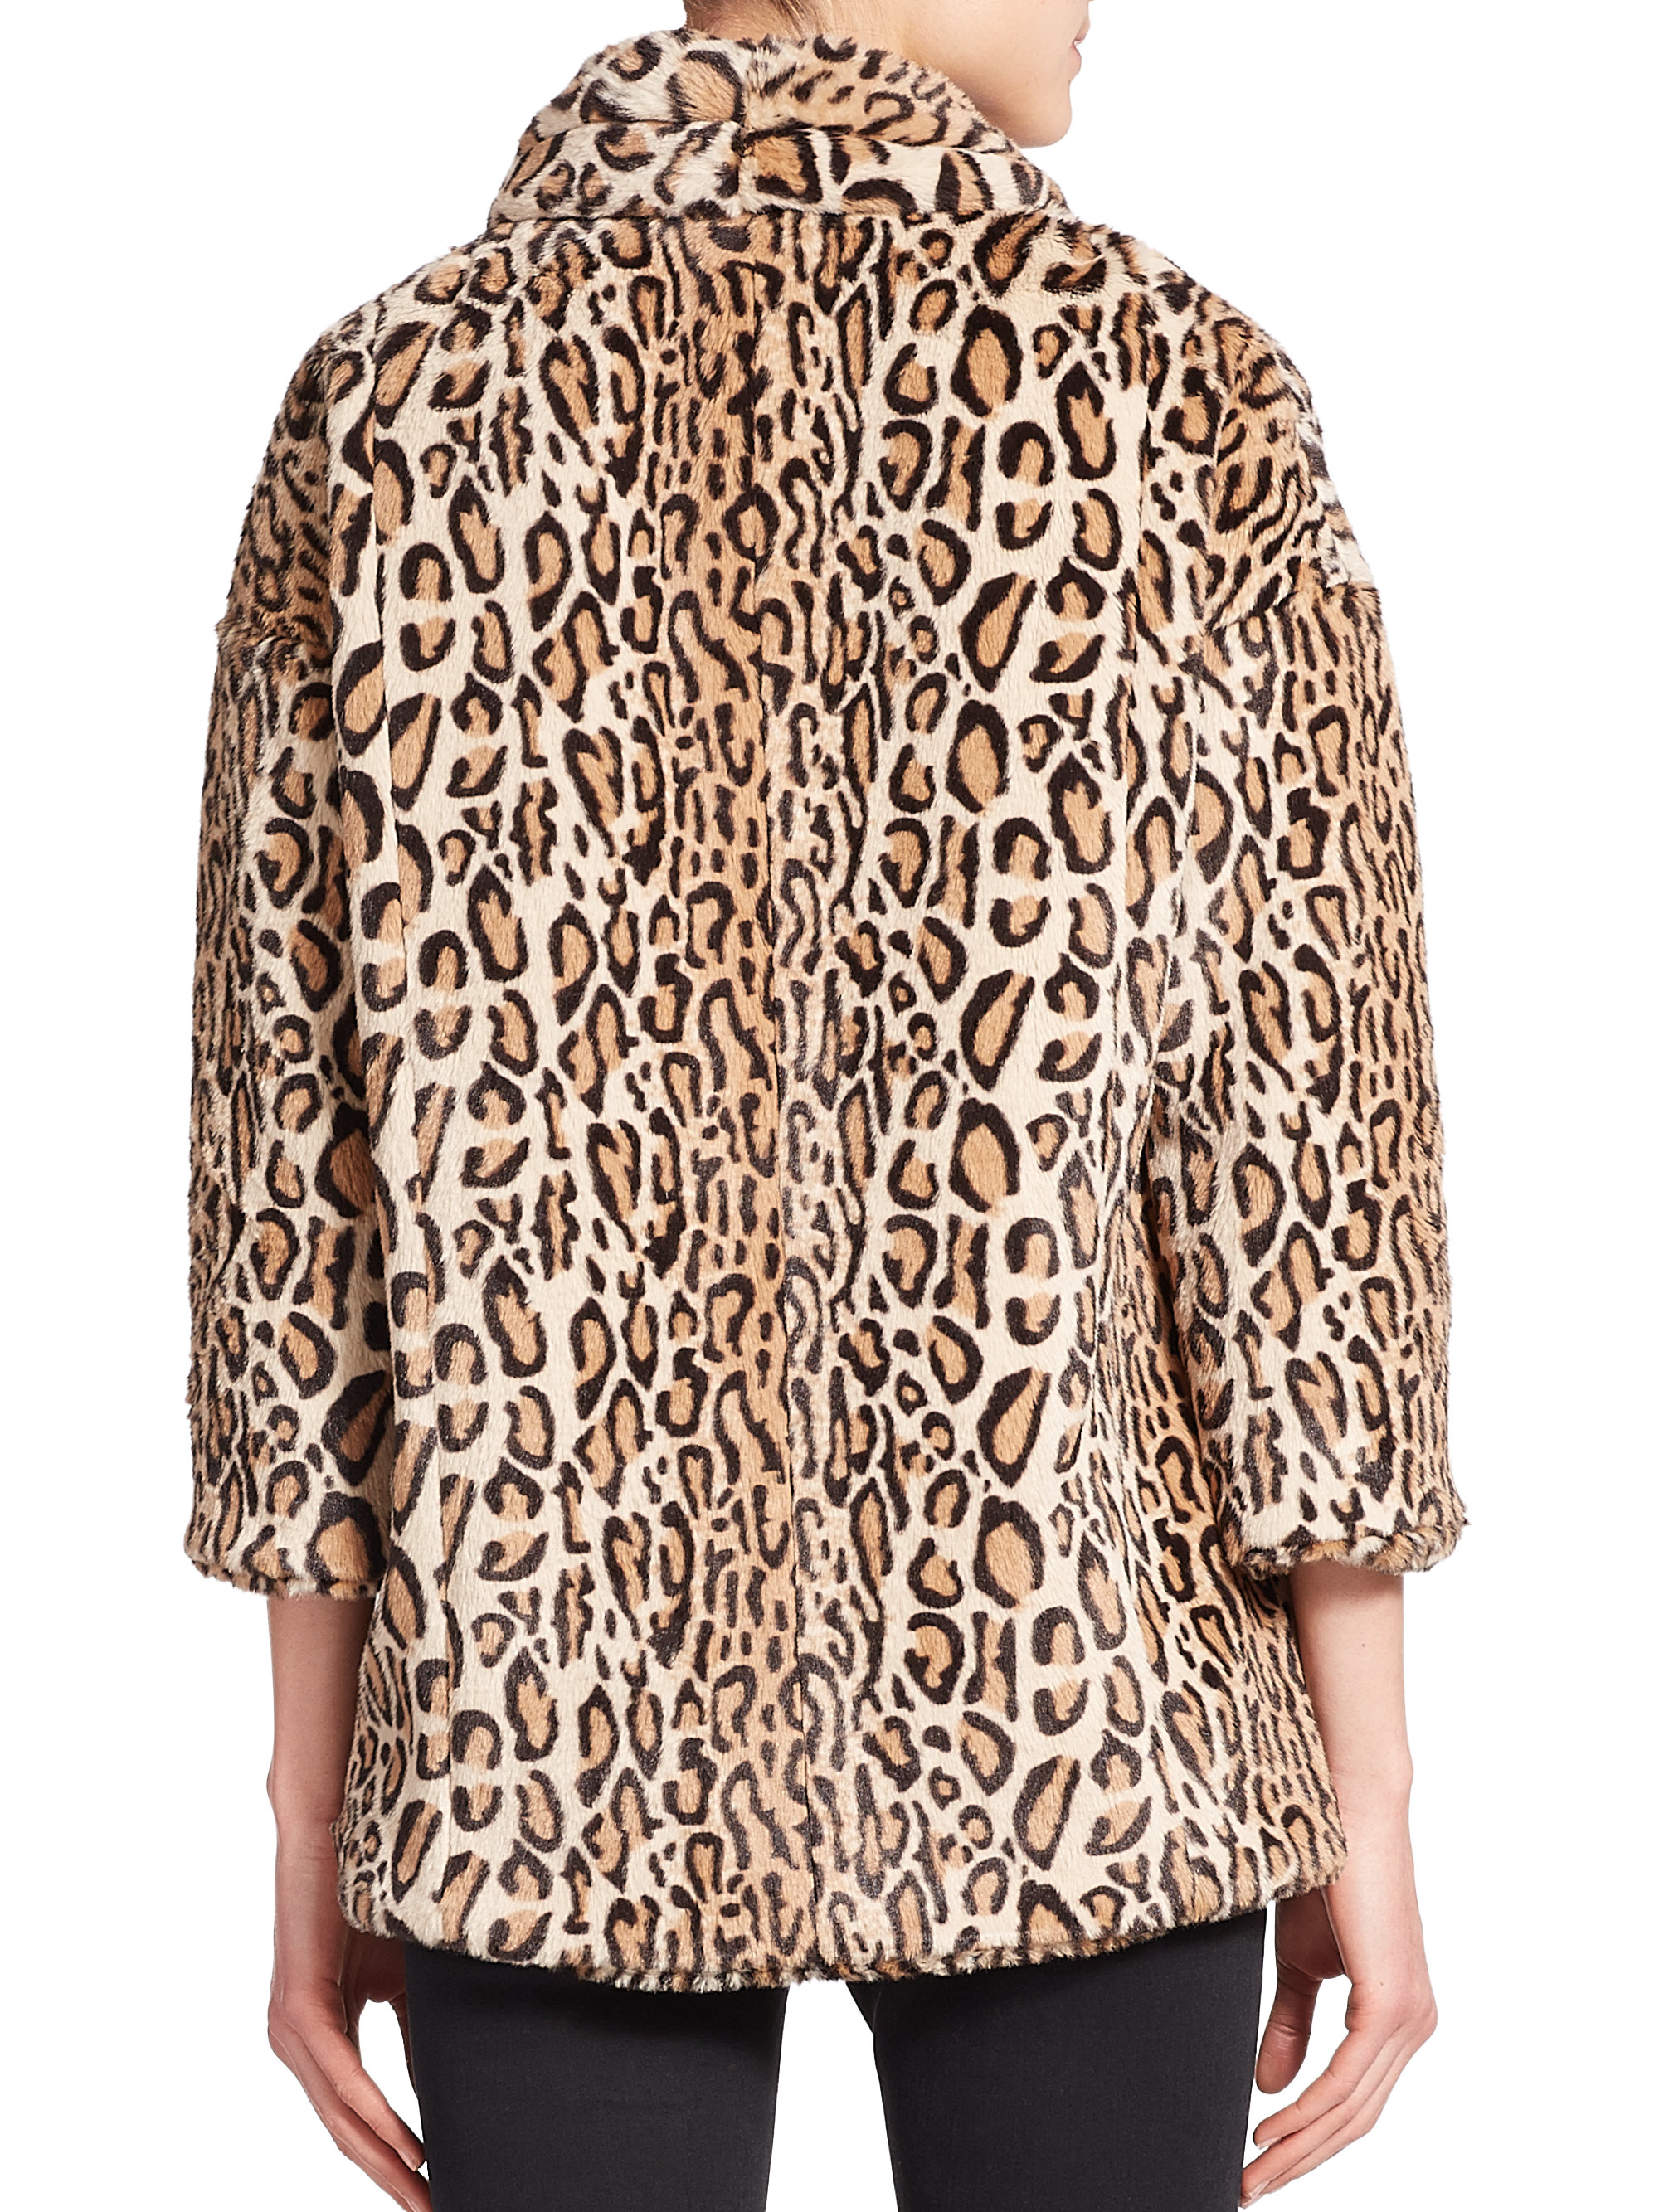 Lyst - The Kooples Faux Fur Leopard-print Jacket